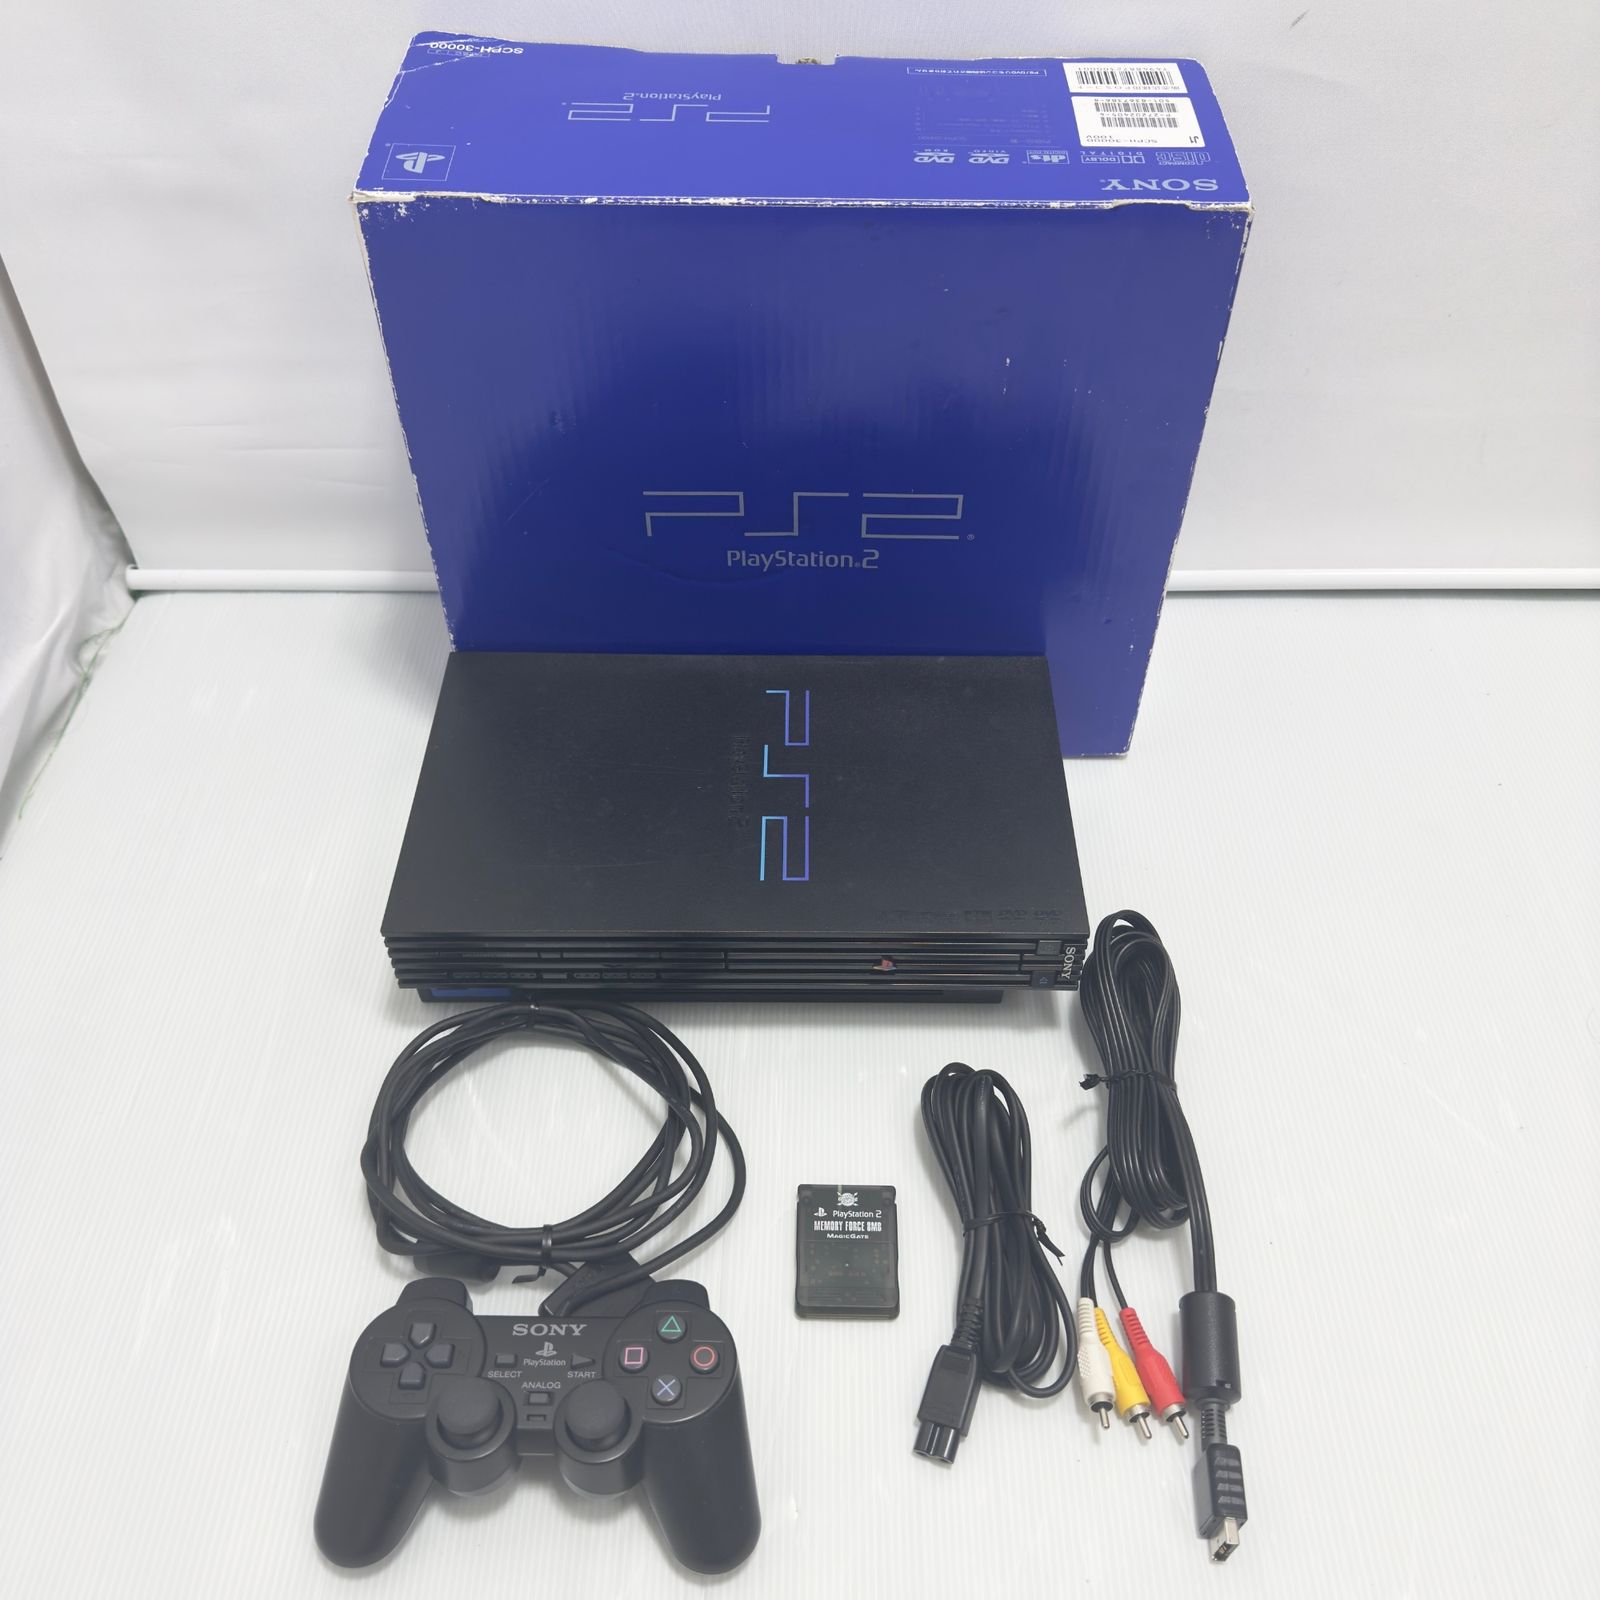 PlayStation 2 (SCPH-30000) メモリーカード8MB付き - メルカリ